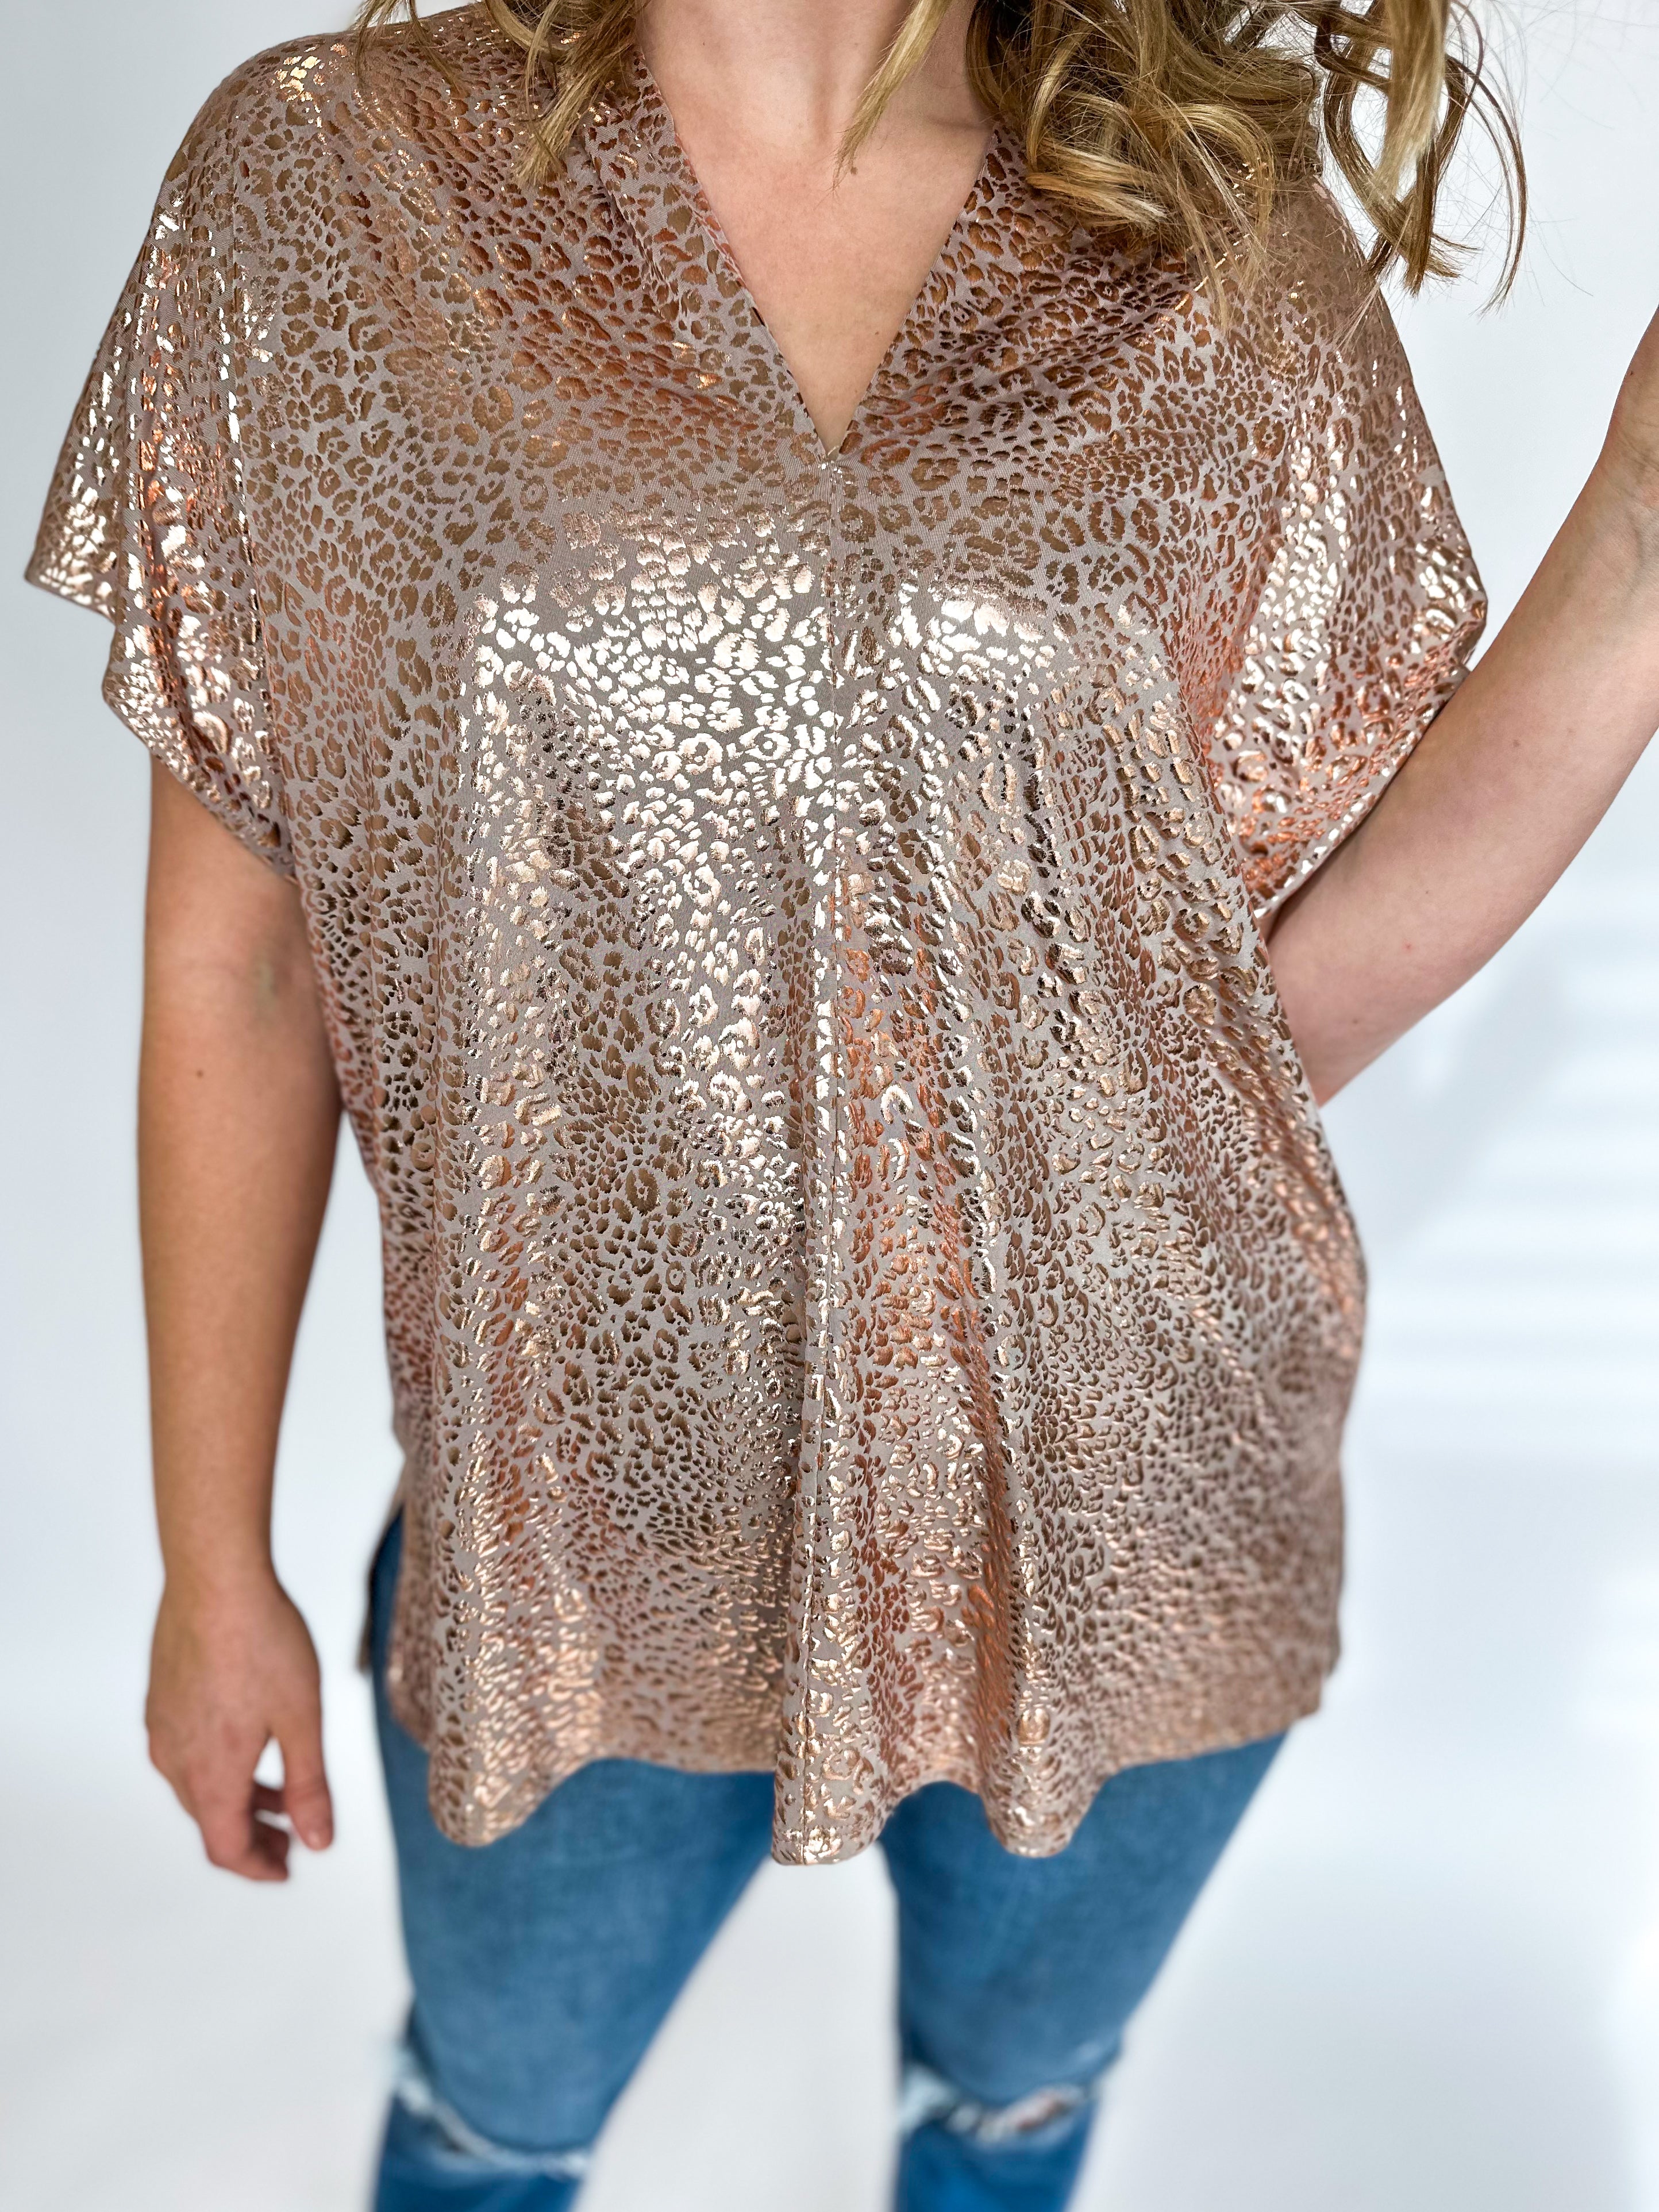 Shania Cheetah Blouse-200 Fashion Blouses-ADRIENNE-July & June Women's Fashion Boutique Located in San Antonio, Texas